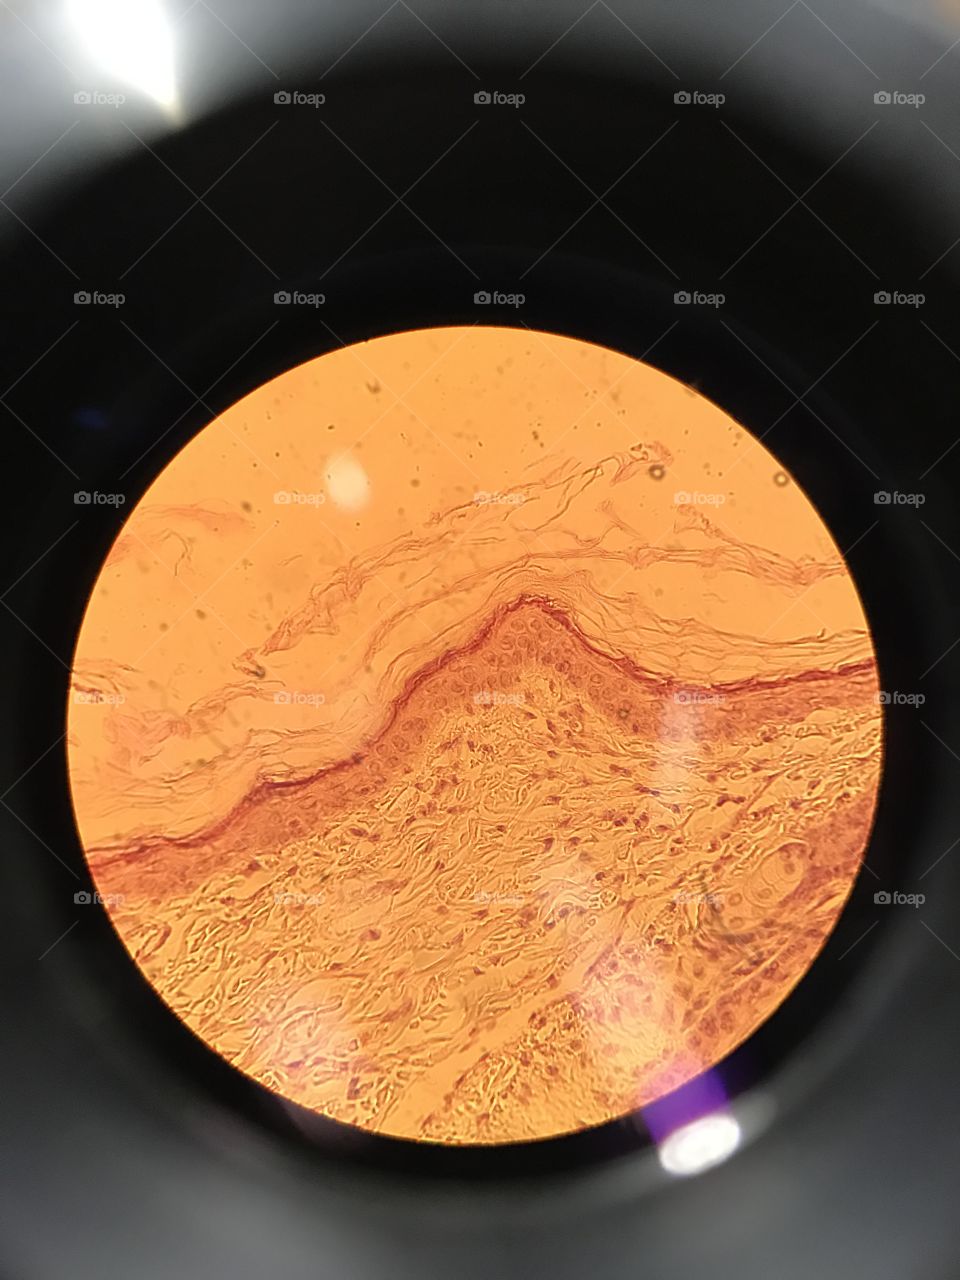 Microscopic views 19